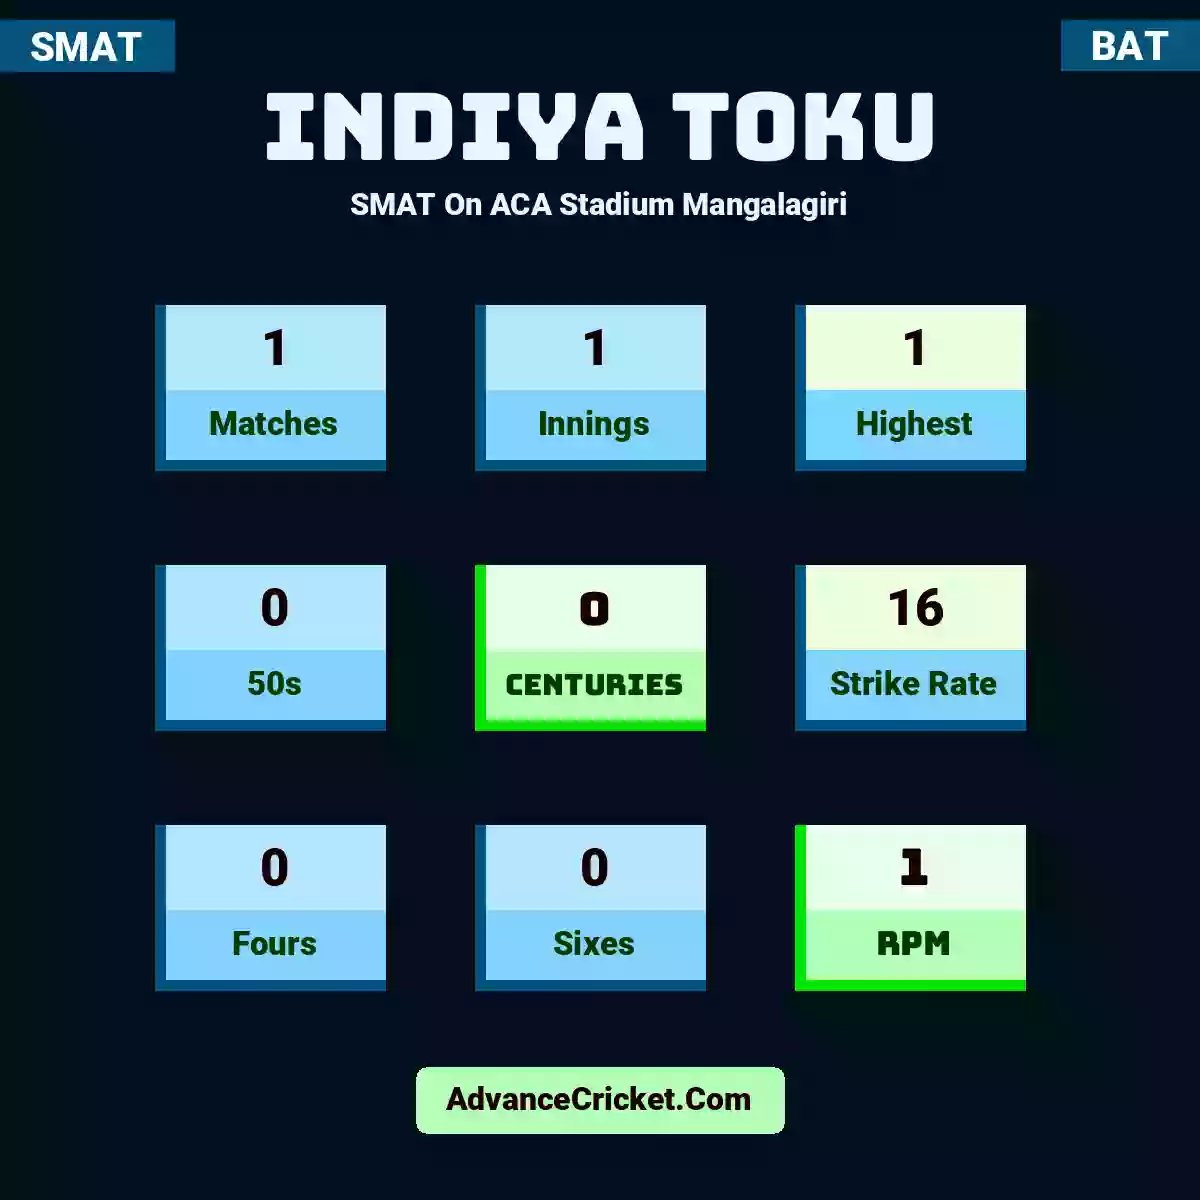 Indiya Toku SMAT  On ACA Stadium Mangalagiri, Indiya Toku played 1 matches, scored 1 runs as highest, 0 half-centuries, and 0 centuries, with a strike rate of 16. I.Toku hit 0 fours and 0 sixes, with an RPM of 1.